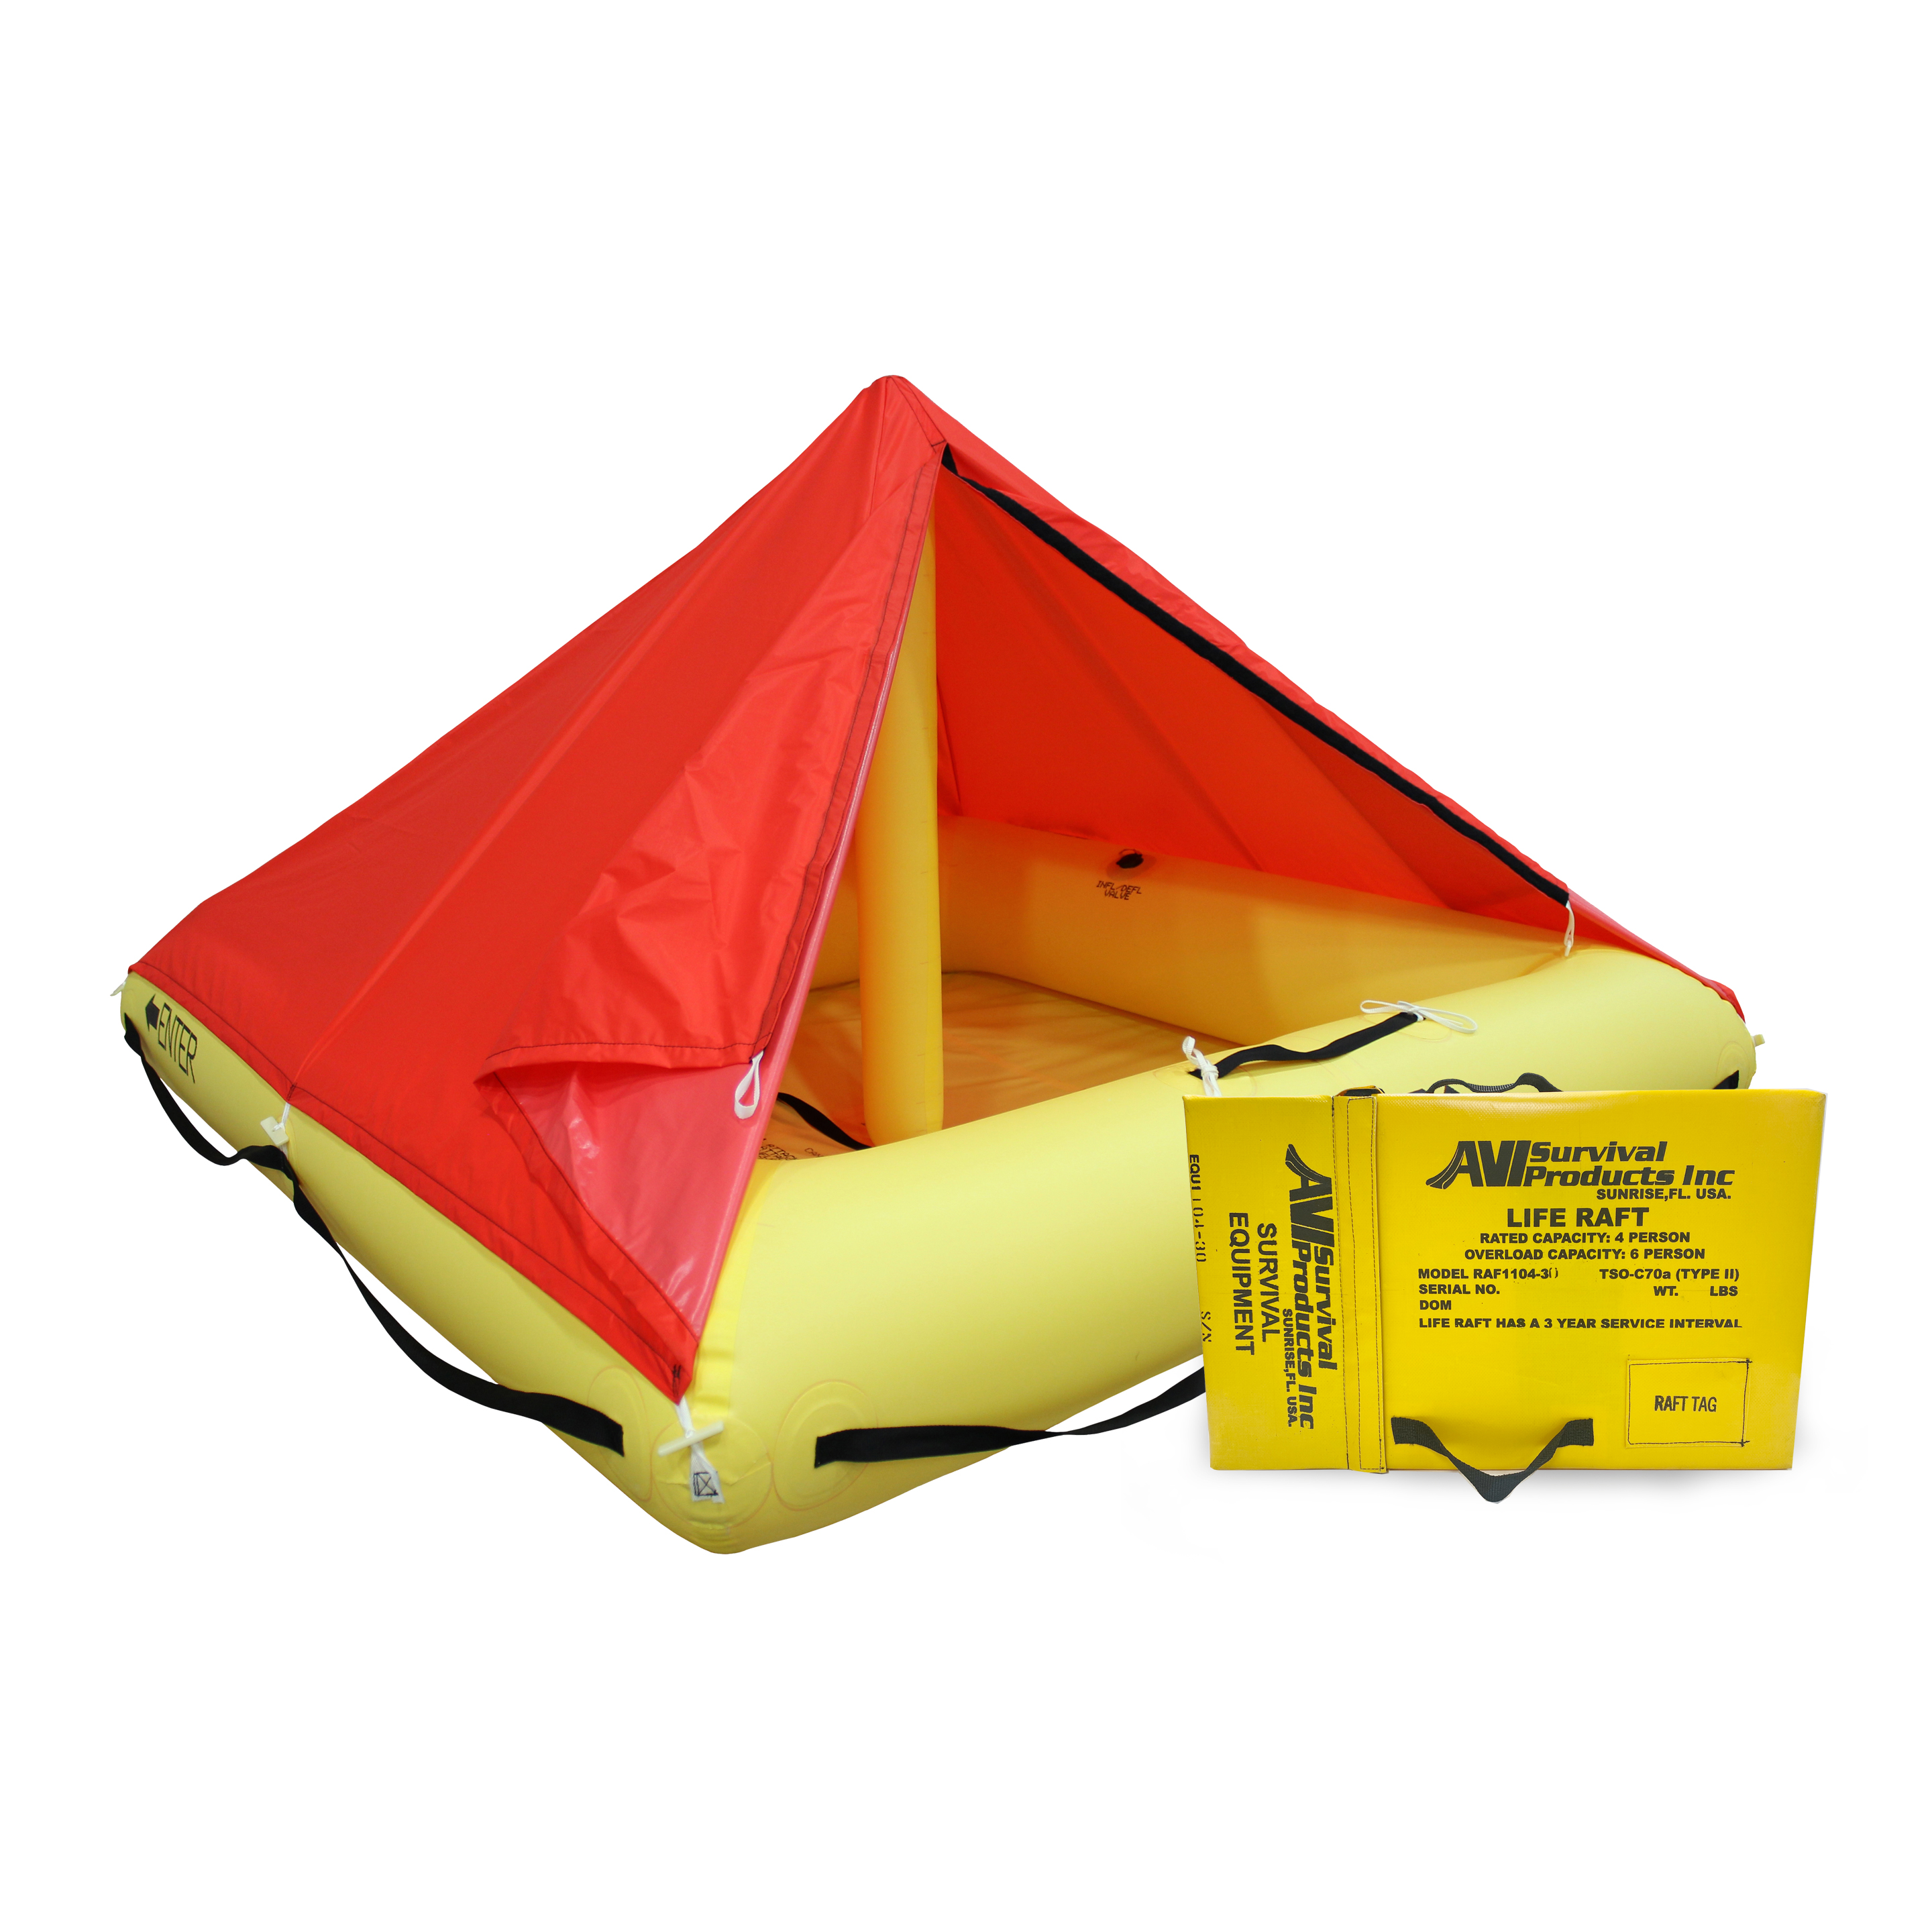 TSO 4 Person Life Raft with FAR 91 Survival Equipment Kit